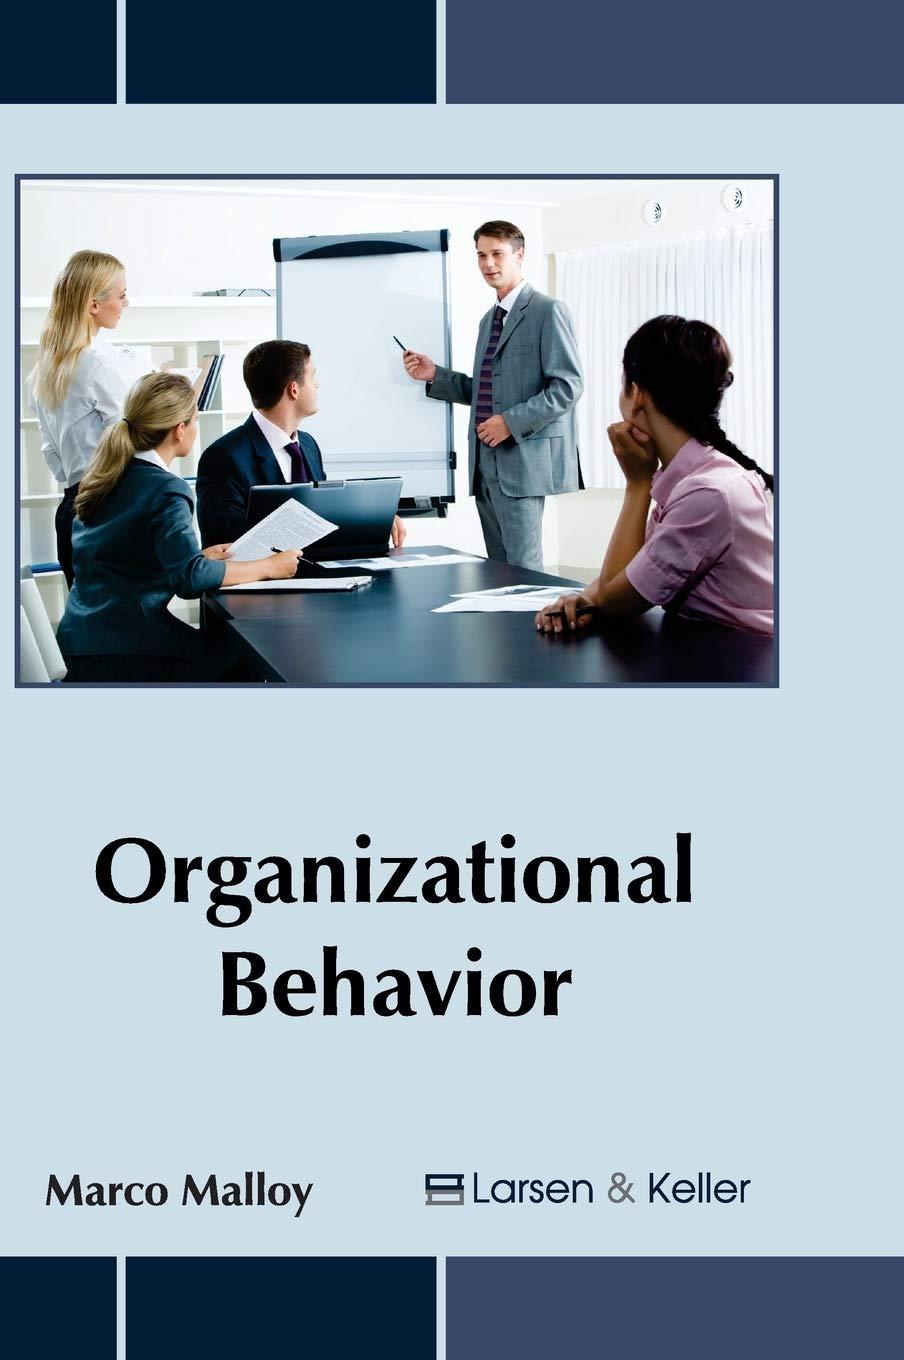 organizational behavior 1st edition marco malloy 163549169x, 9781635491692